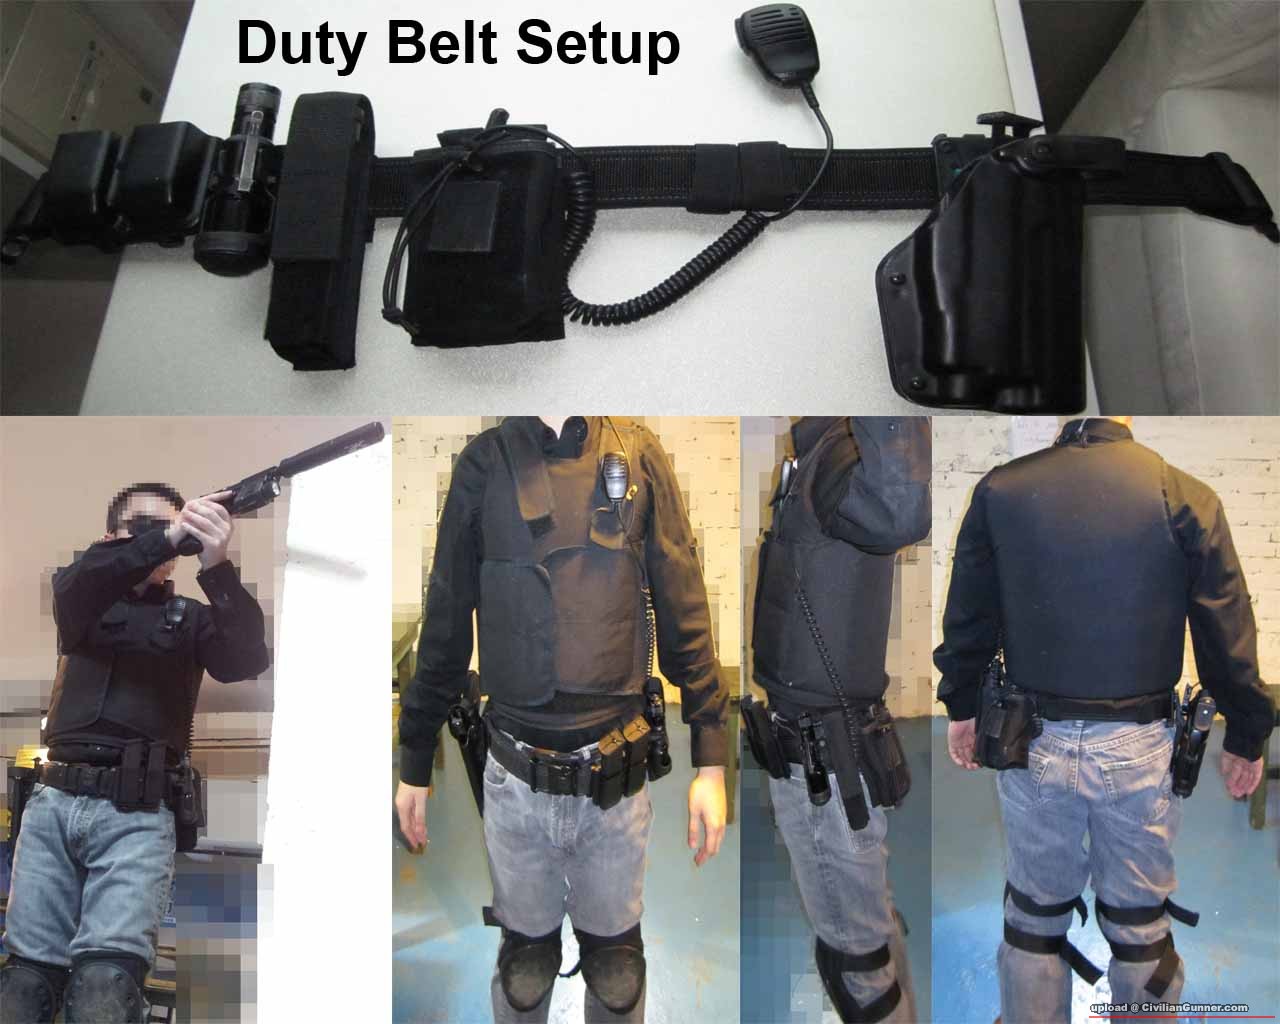 Duty belt setup.jpg